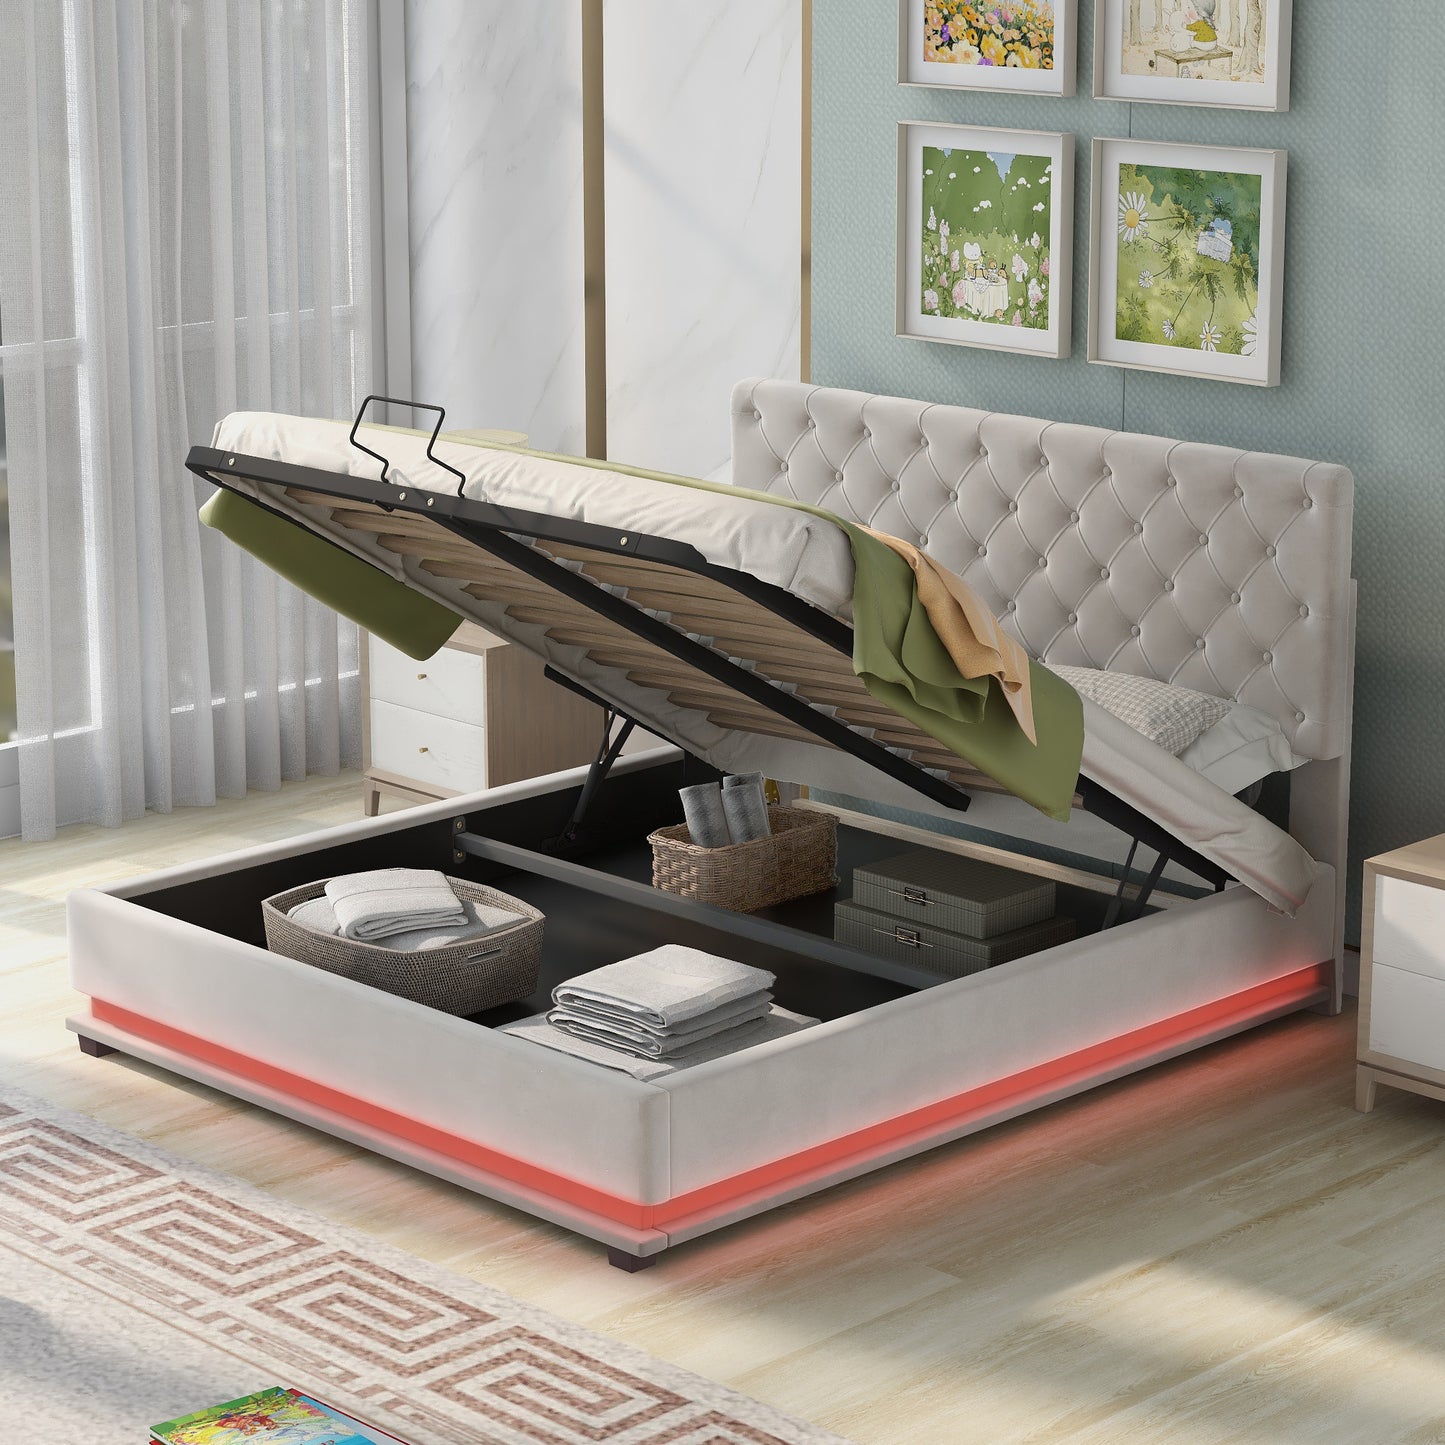 upholstered platform bed with adjustable tufted headboard and led light